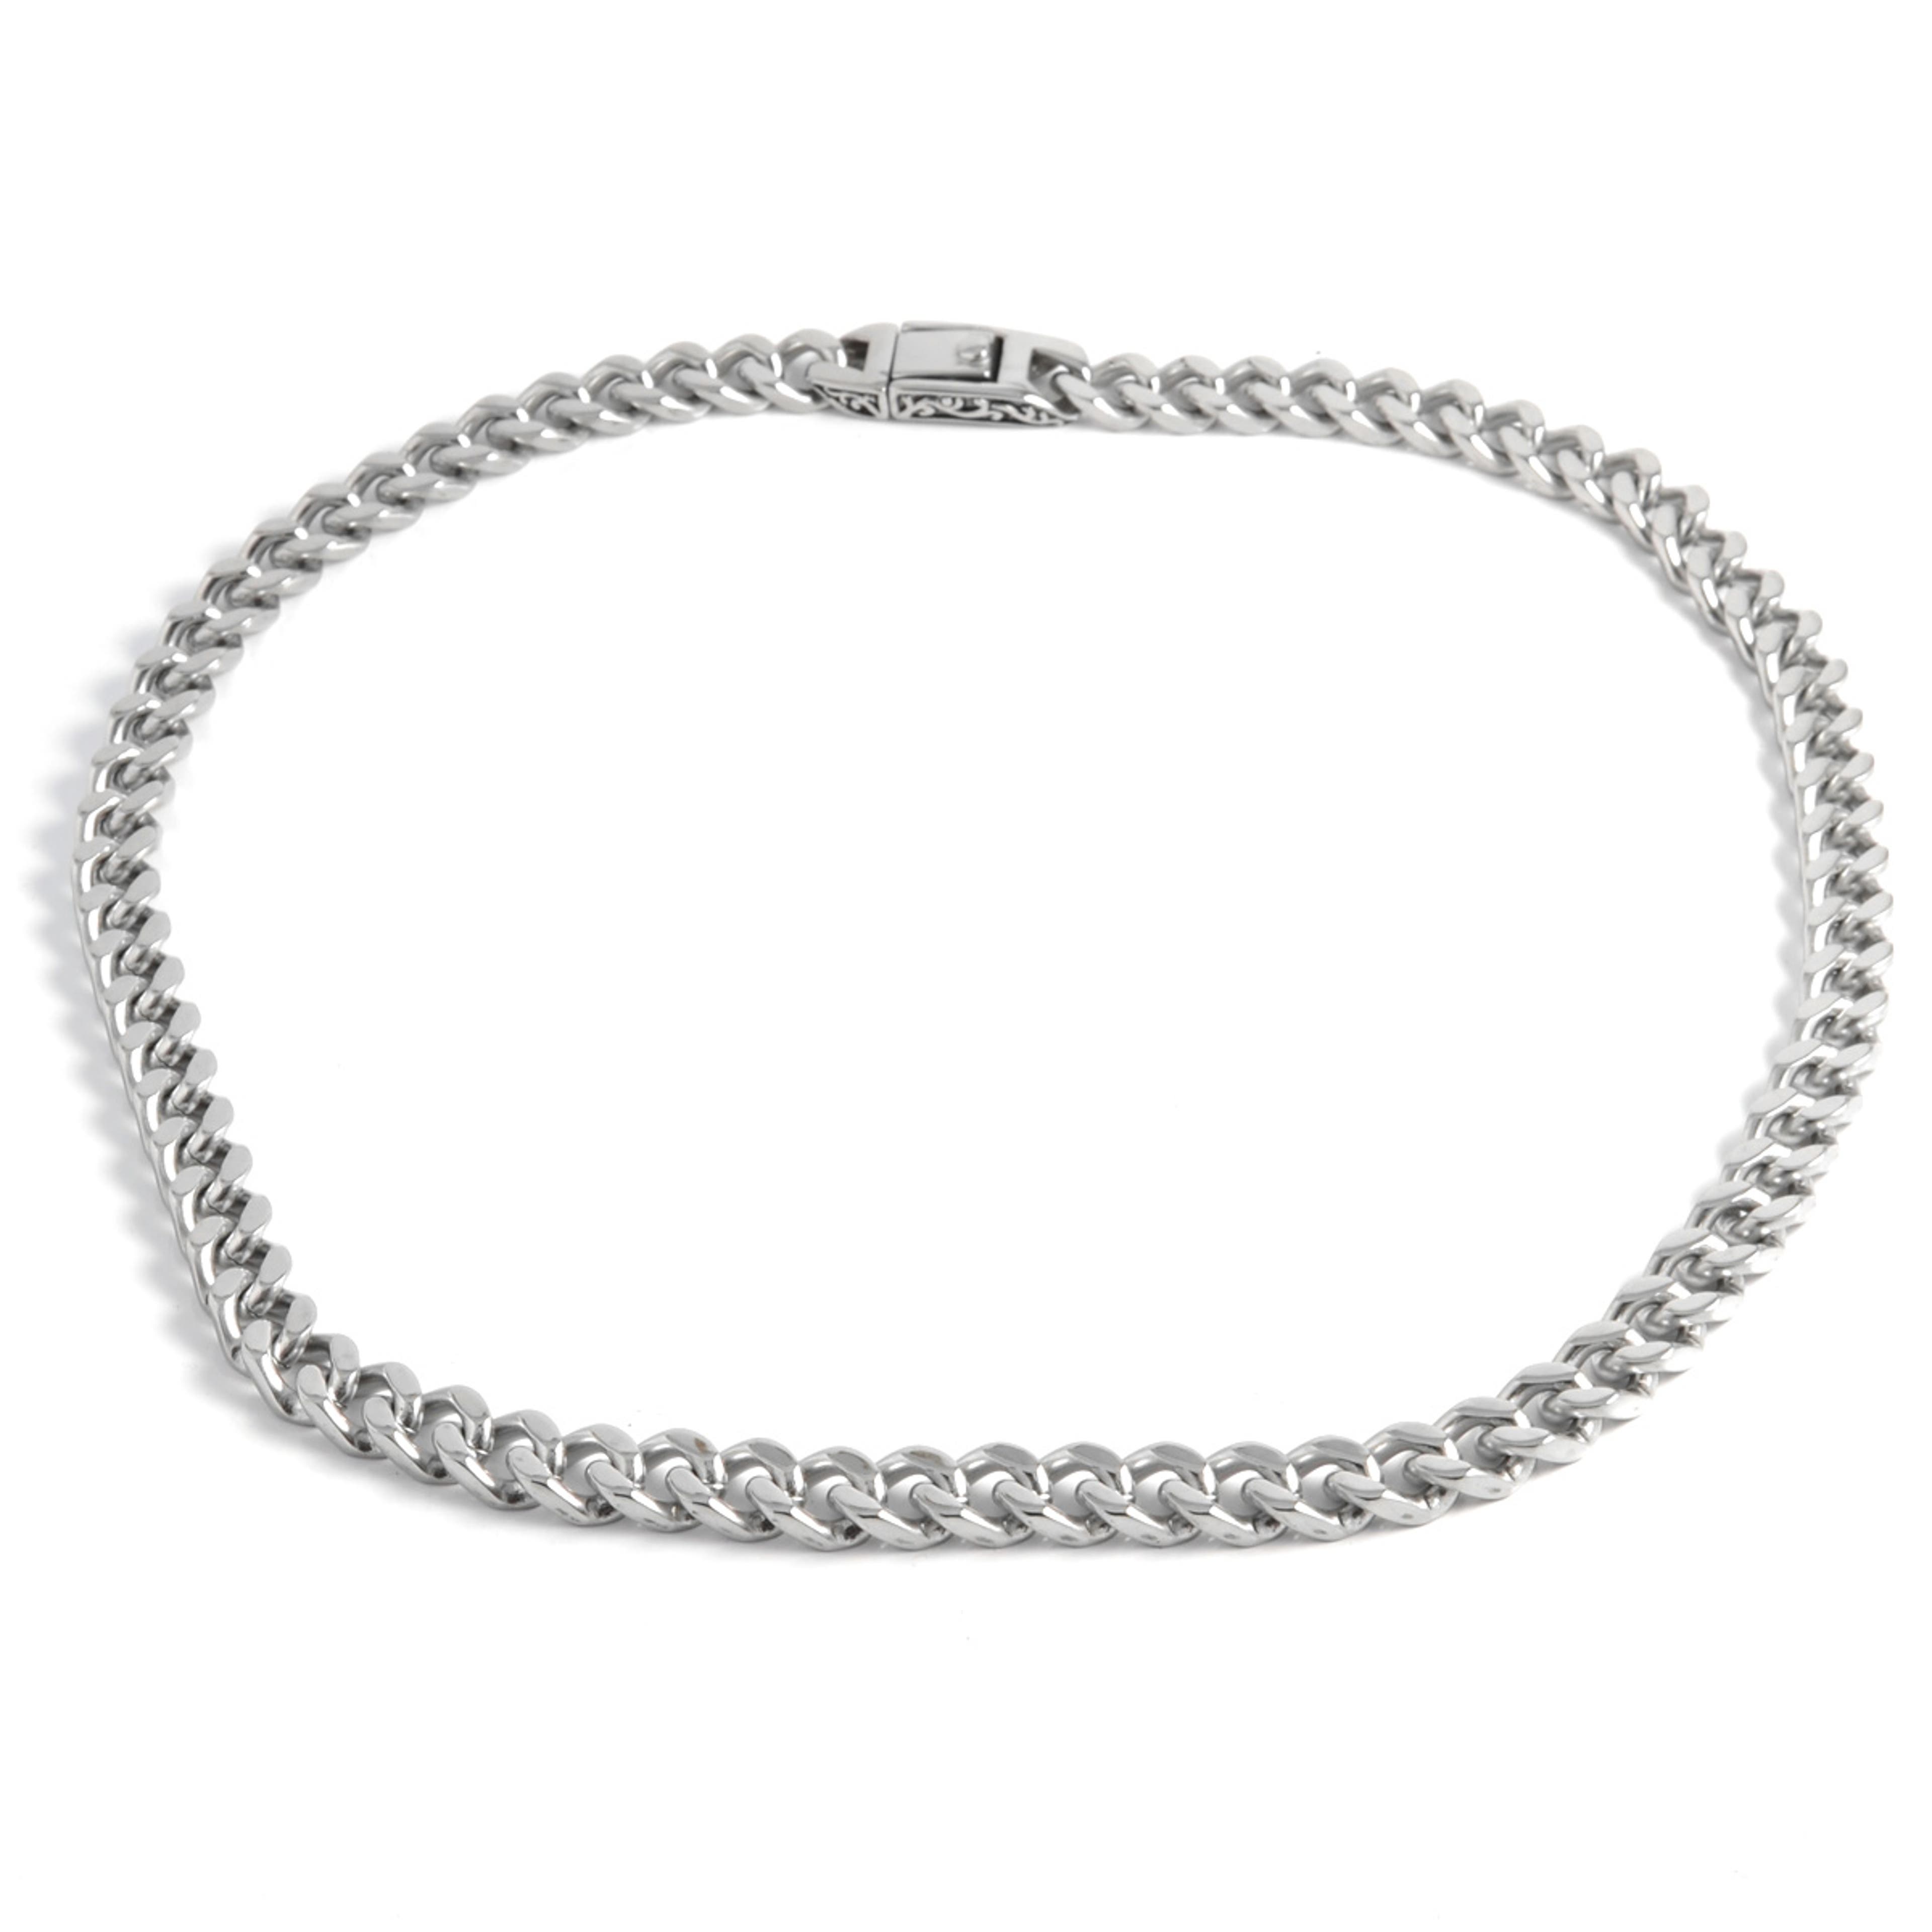 Lock silver - Silver necklaces - Trium Jewelry - Men collection